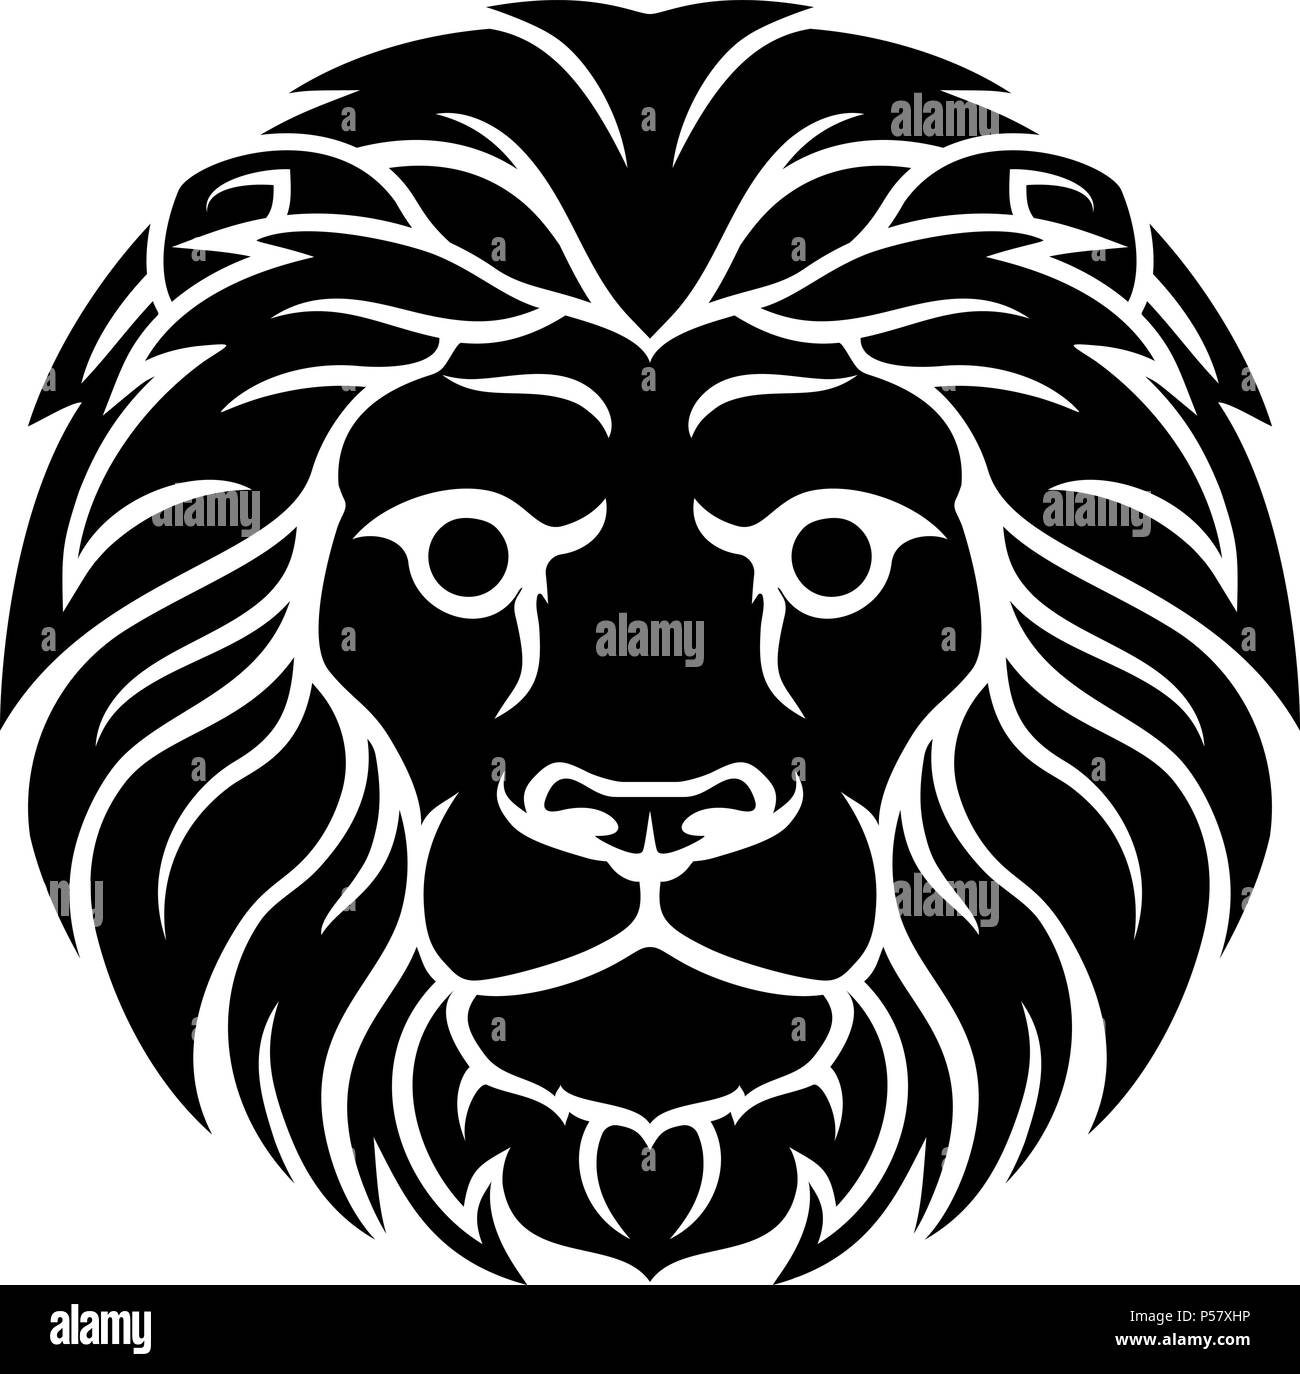 Autocollant sticker signe zodiaque astrologie leo lion noir blanc horoscope 